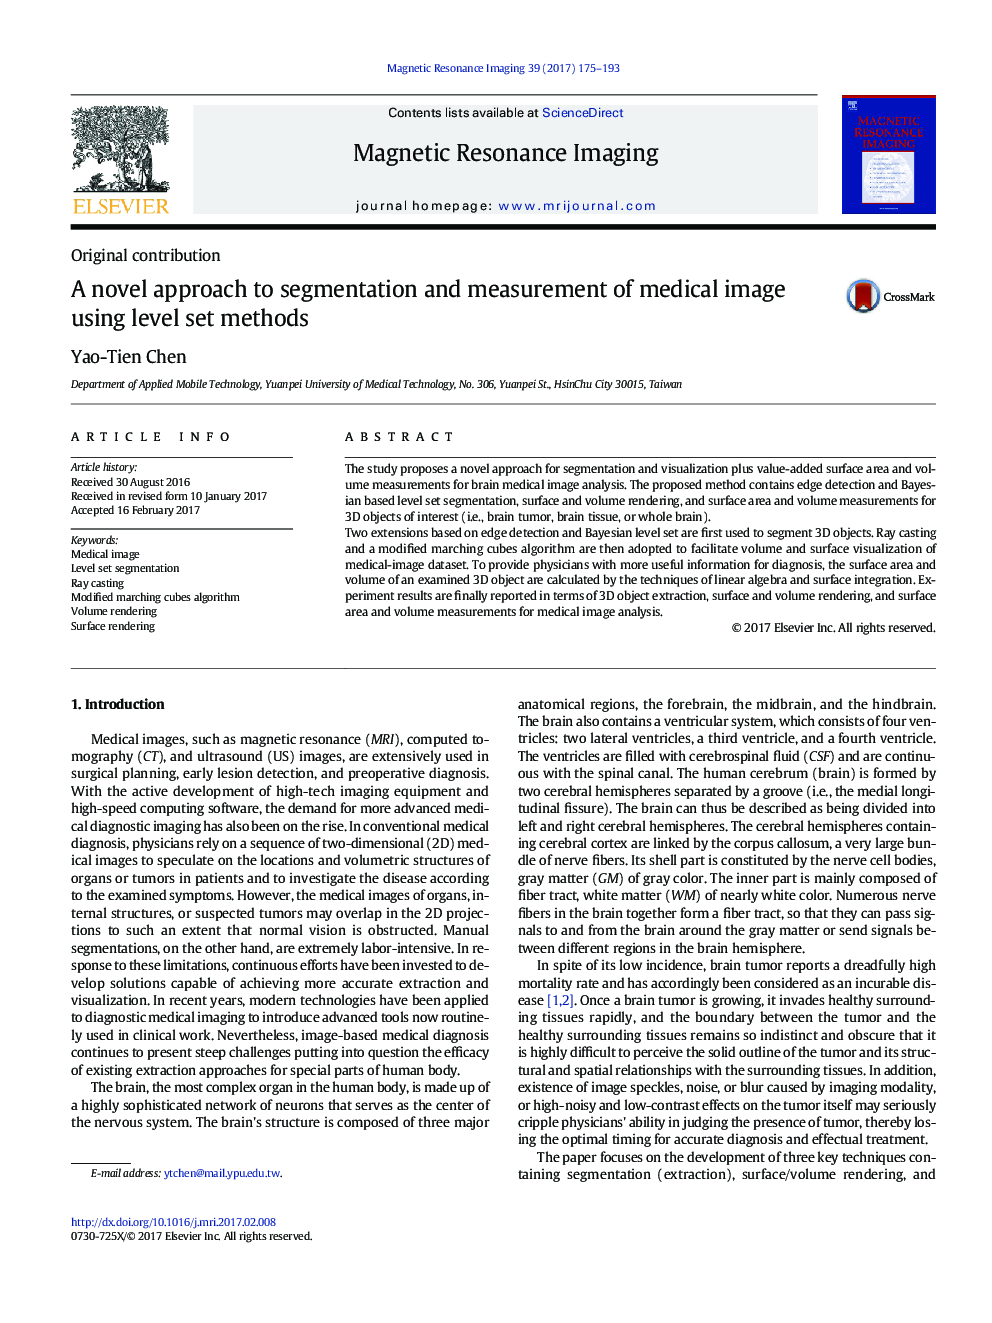 A novel approach to segmentation and measurement of medical image using level set methods